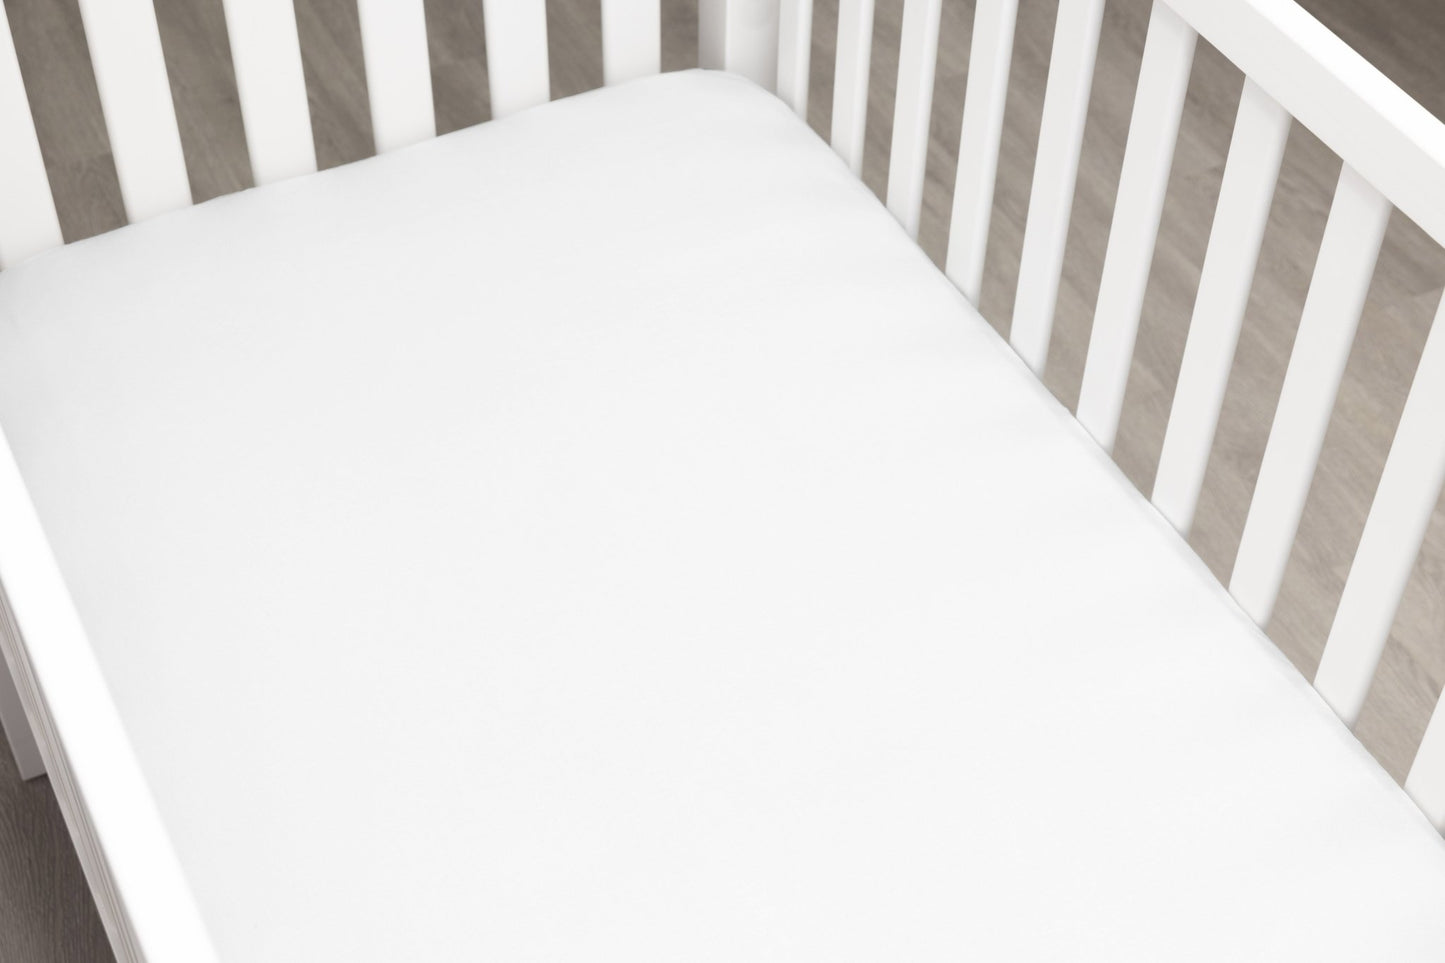 White and Khaki Buffalo Plaid Crib Bedding - 3 Piece Set - New Arrivals Inc